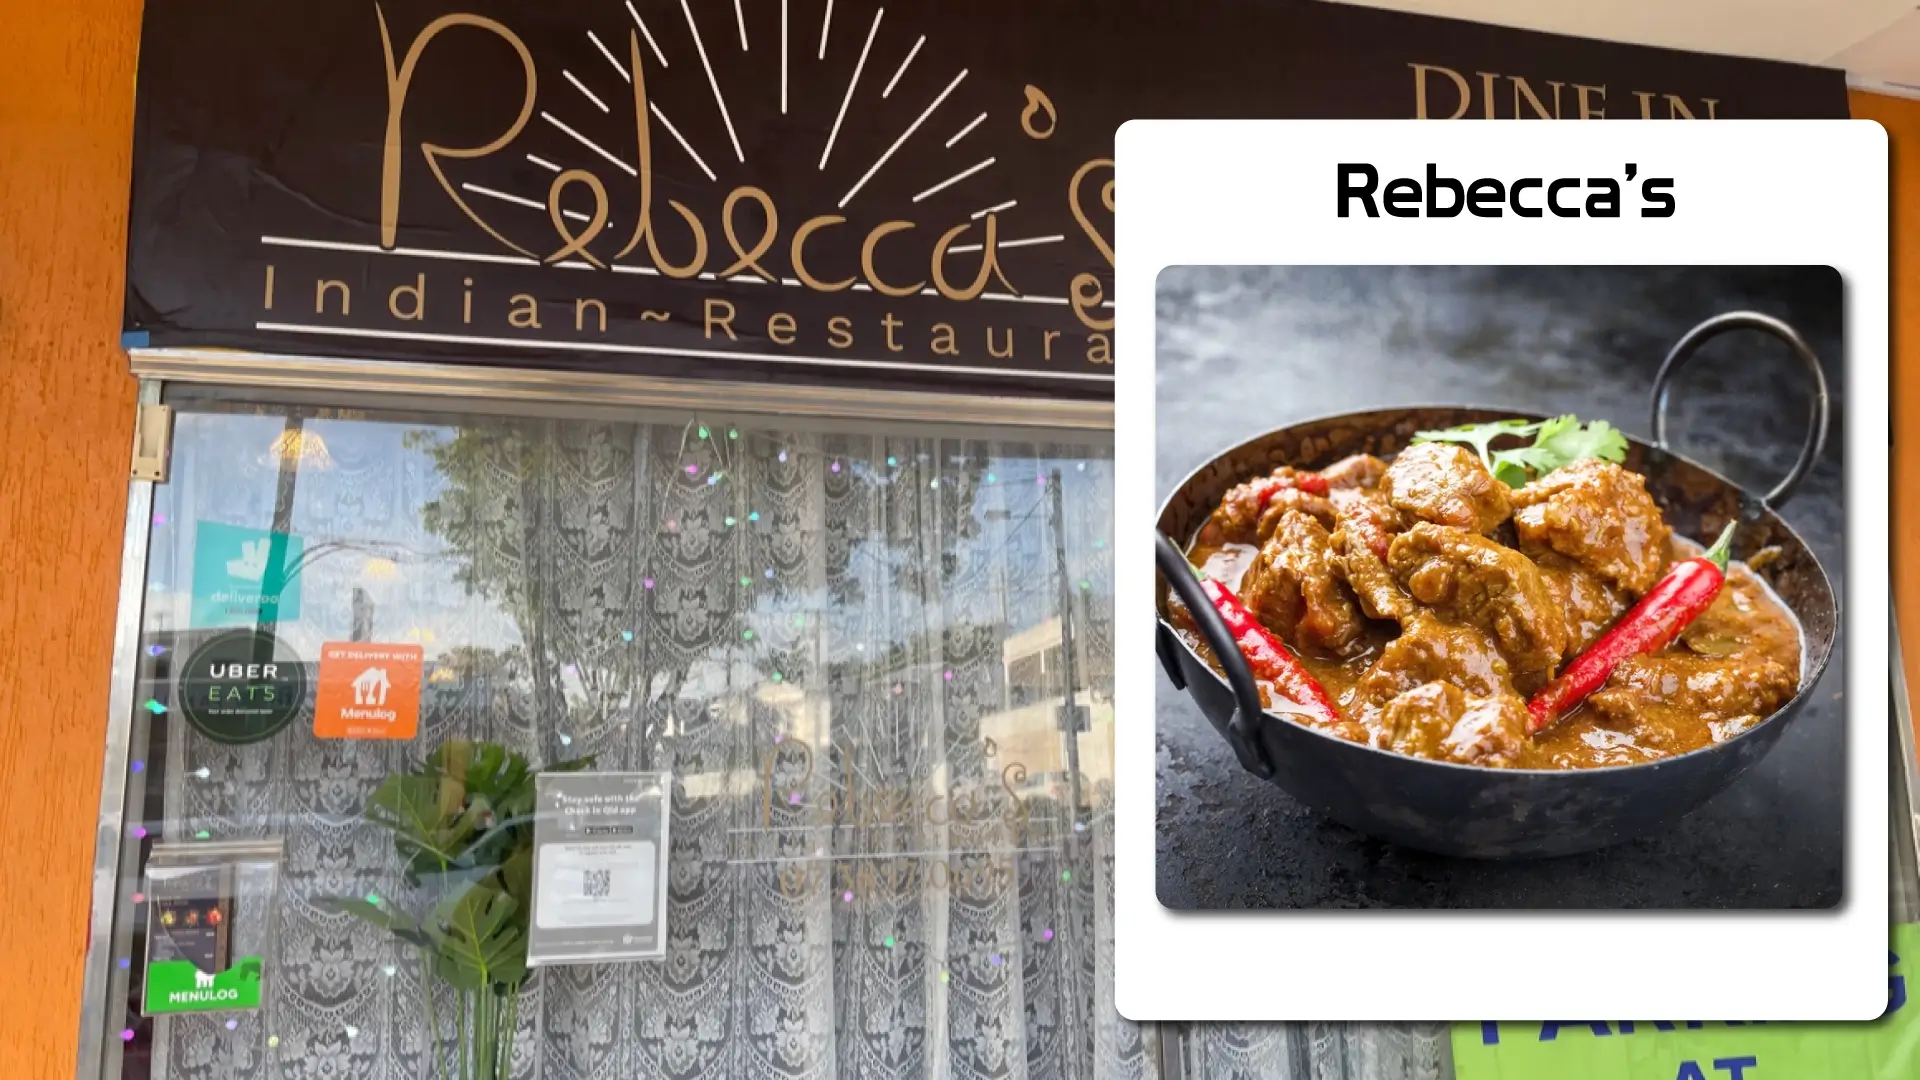 Rebecca’s Indian Restaurant